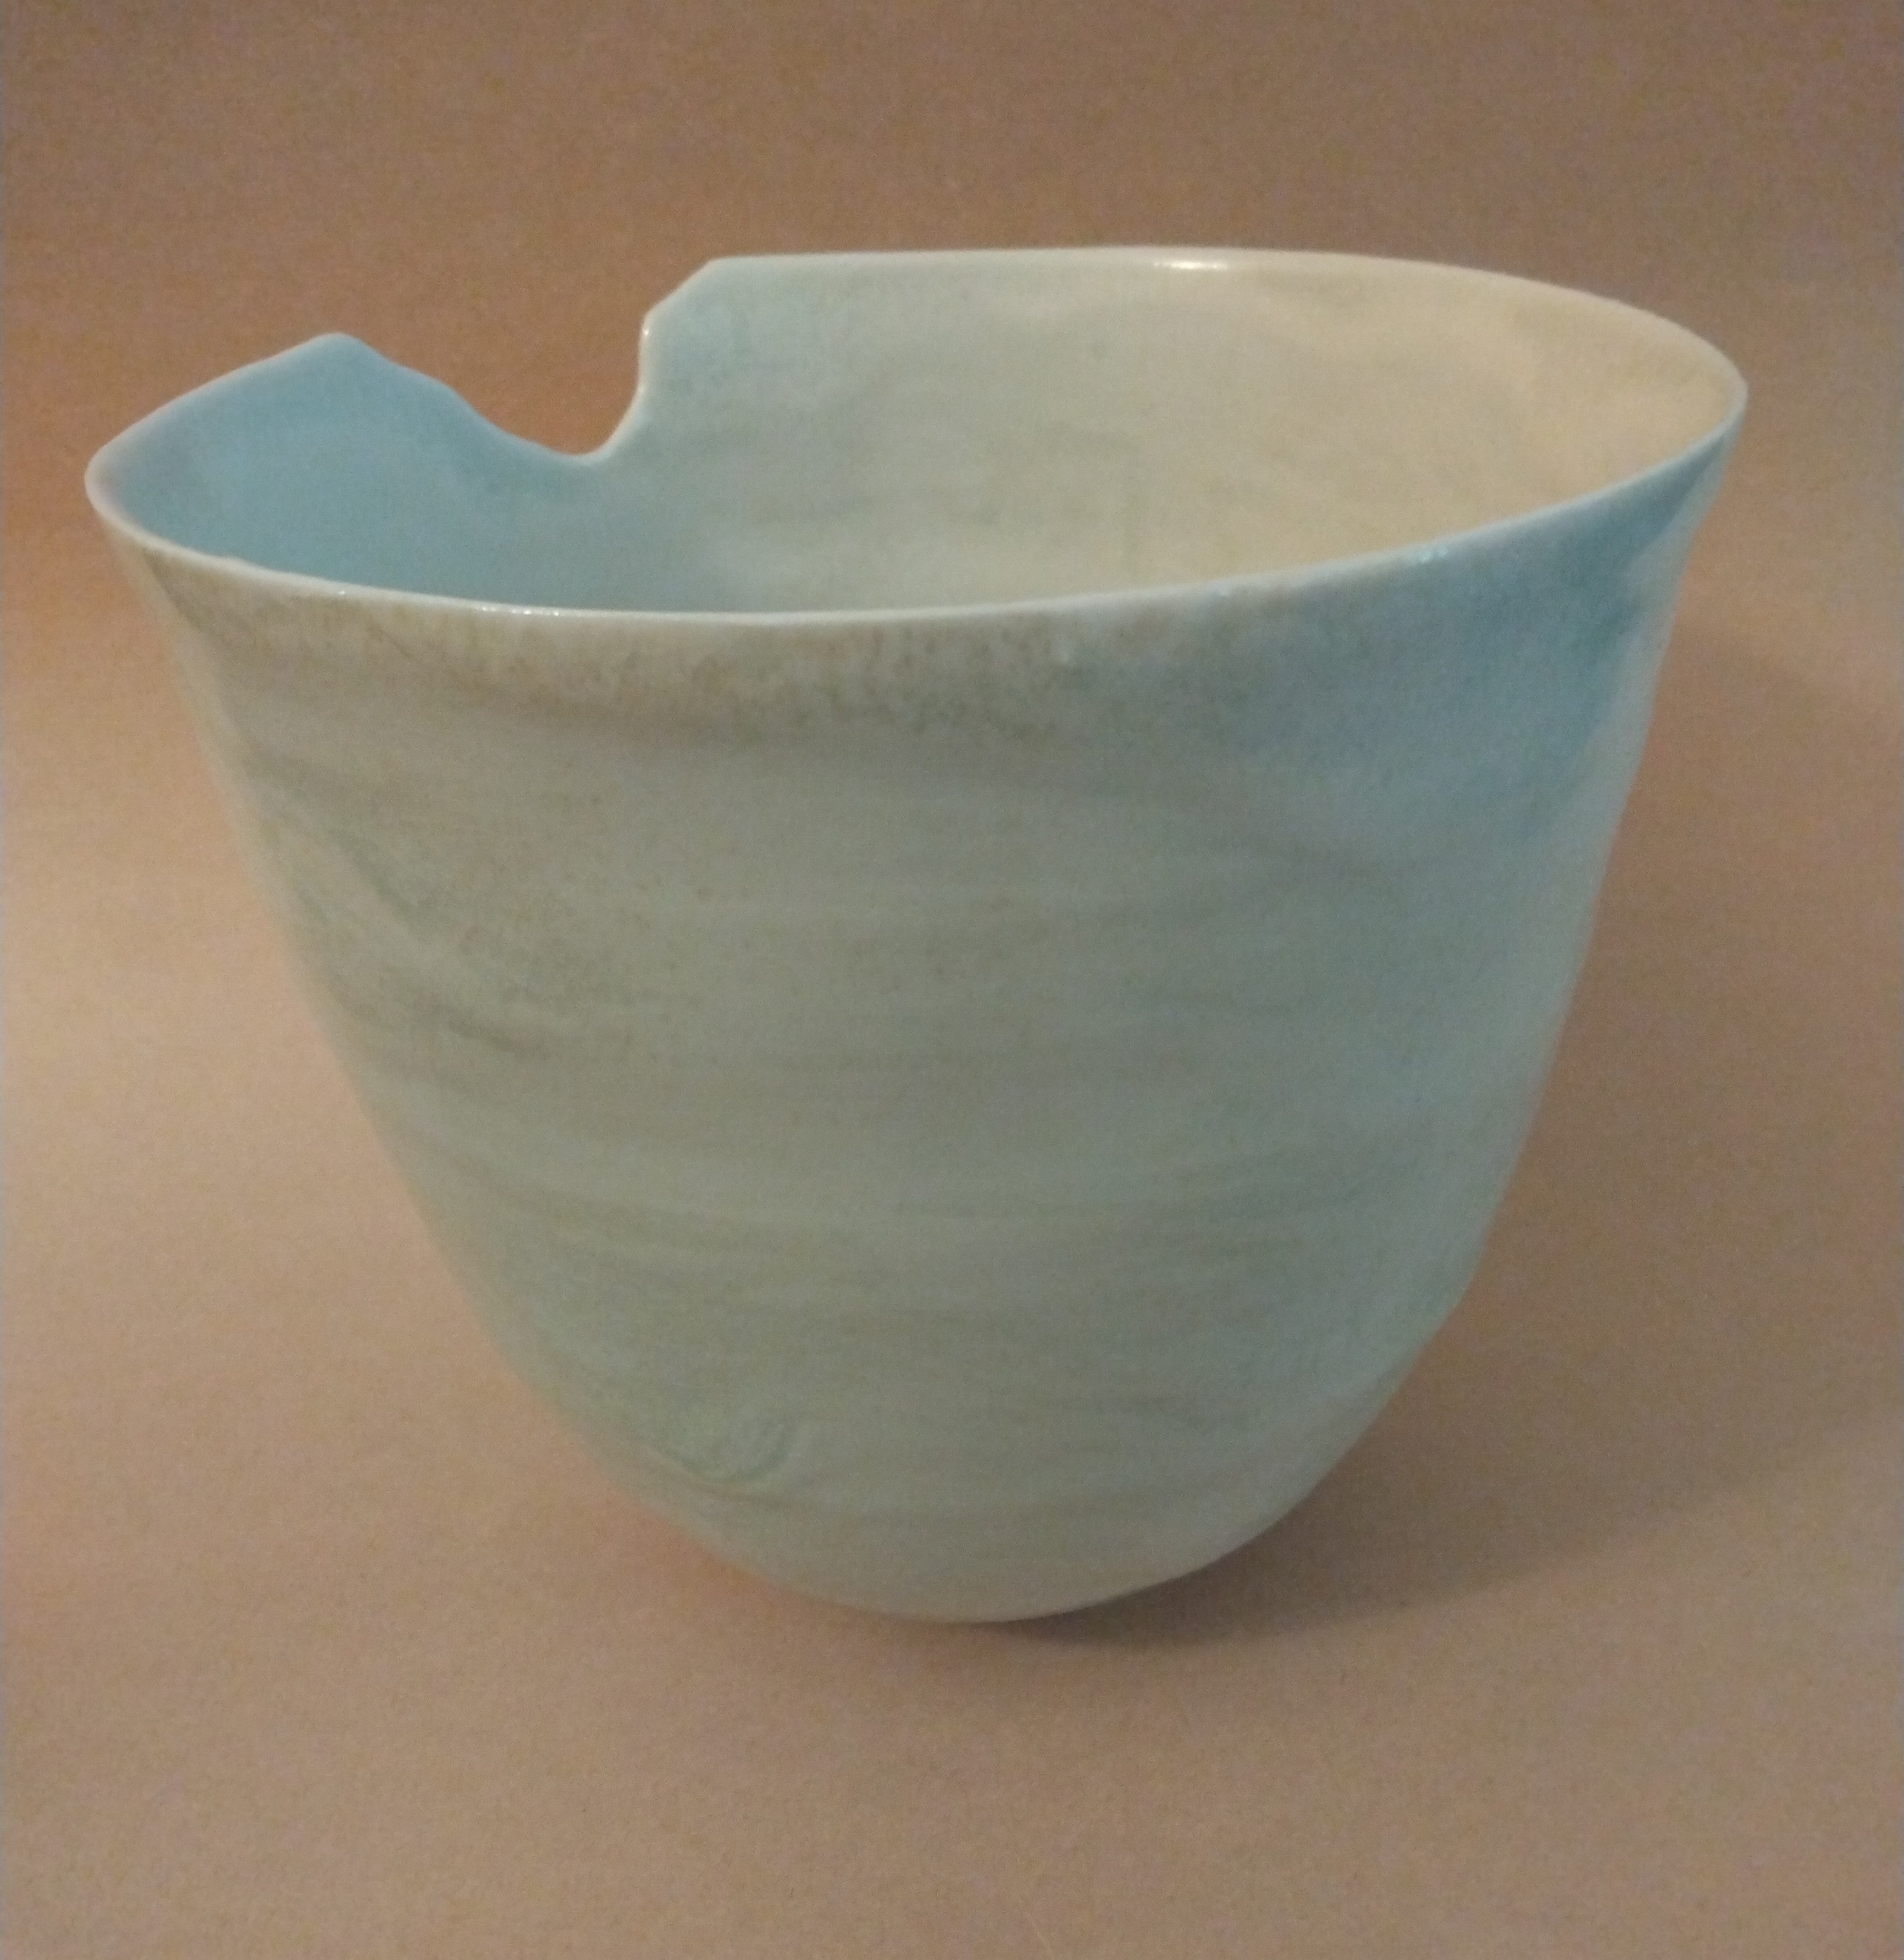 20% donated to Maui Wildfire Relief - Tall Bowl with Notched Rim, White Shino Glaze, by Sachiko Furuya